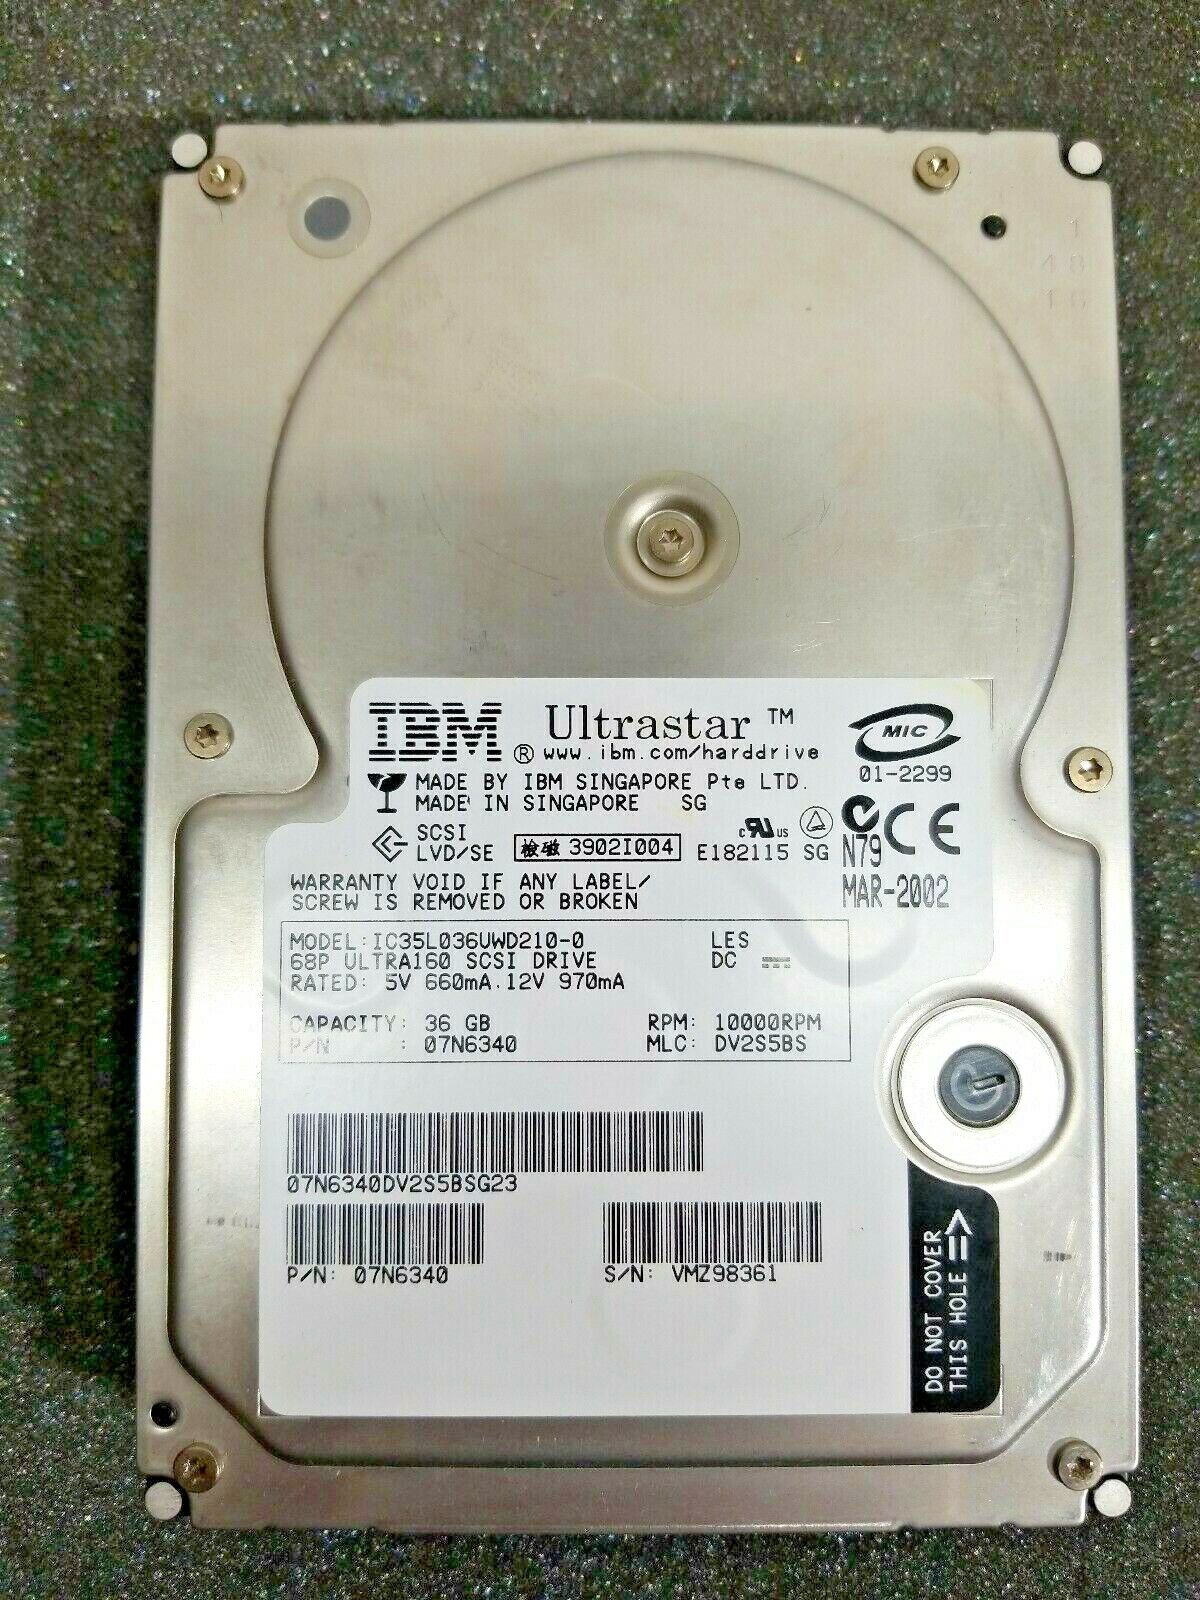 IBM ULTRASTAR PART #: 07N6340  MODEL: IC35L036UWD210-0